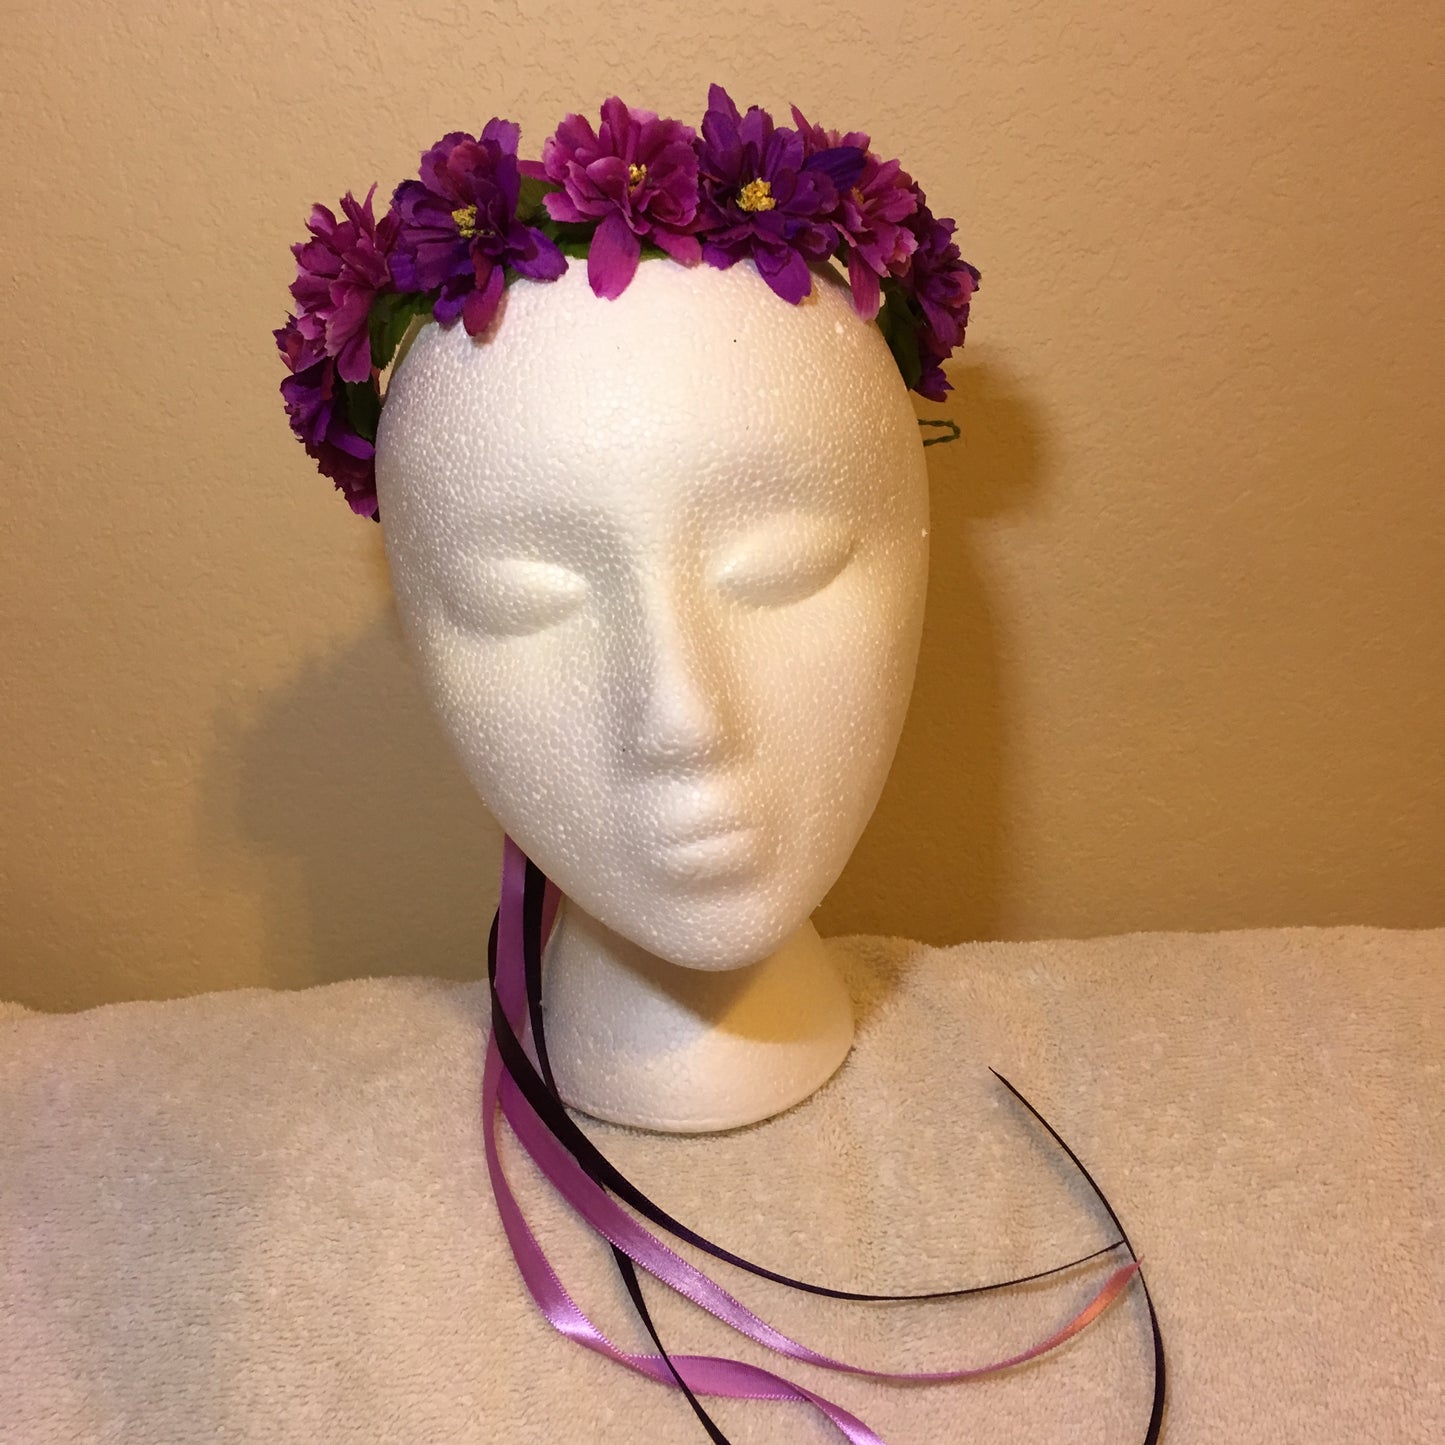 Extra Small Wreath - Light & dark purple flowers, mini mums